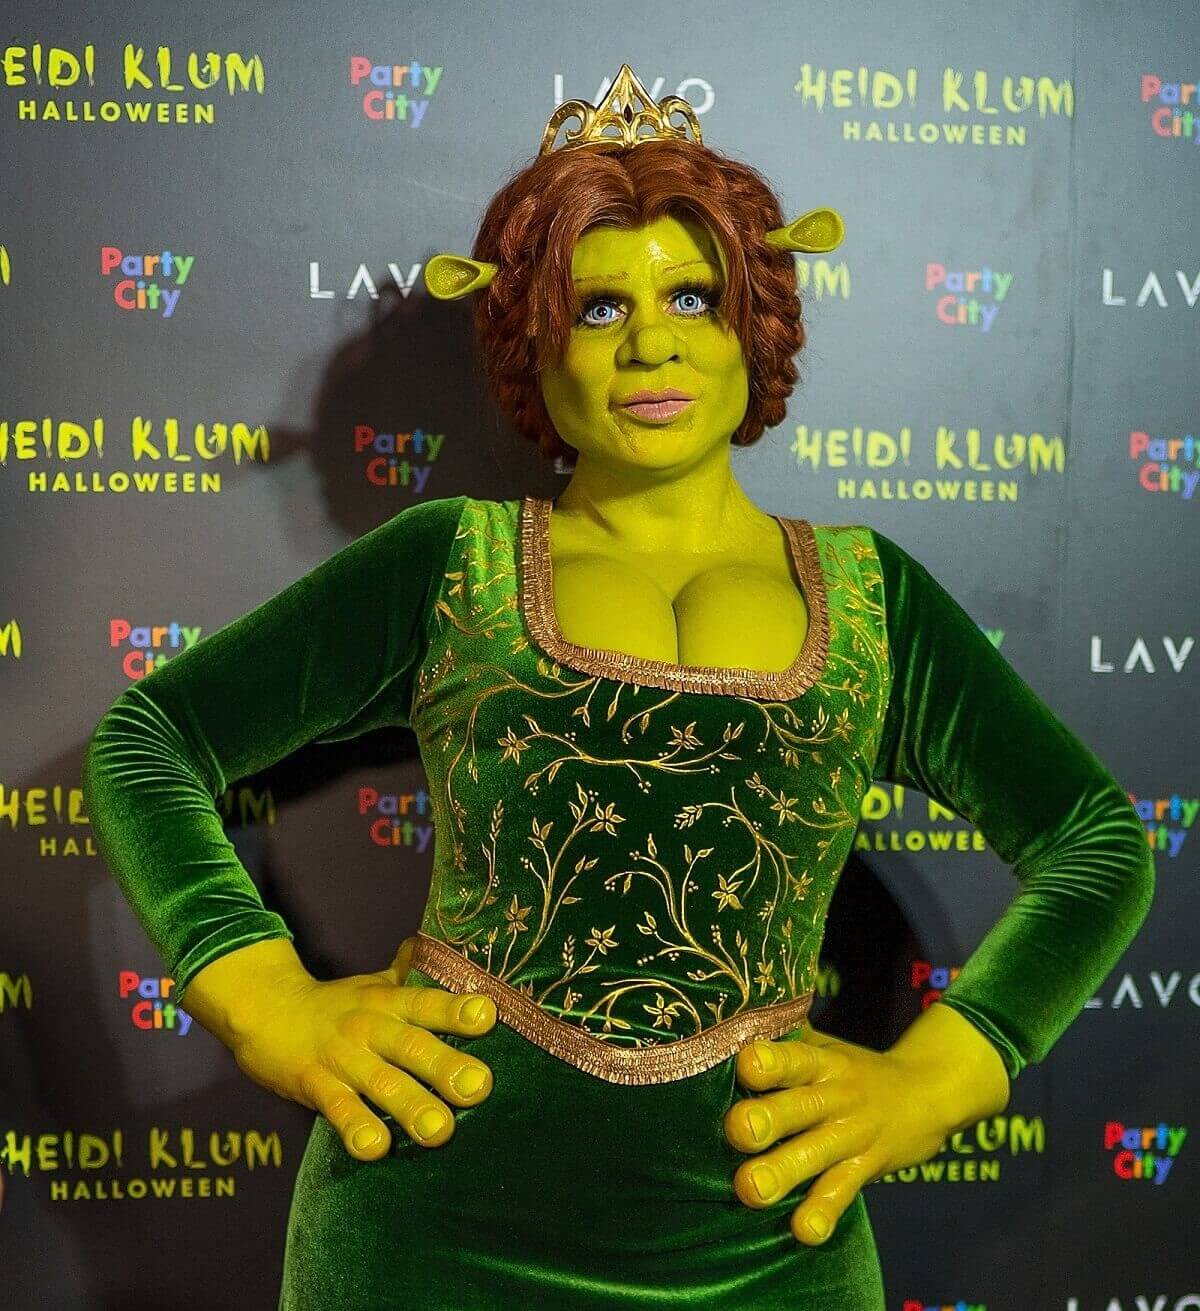 Heidi Klum dressed as Princess Fiona for her annual Halloween party 